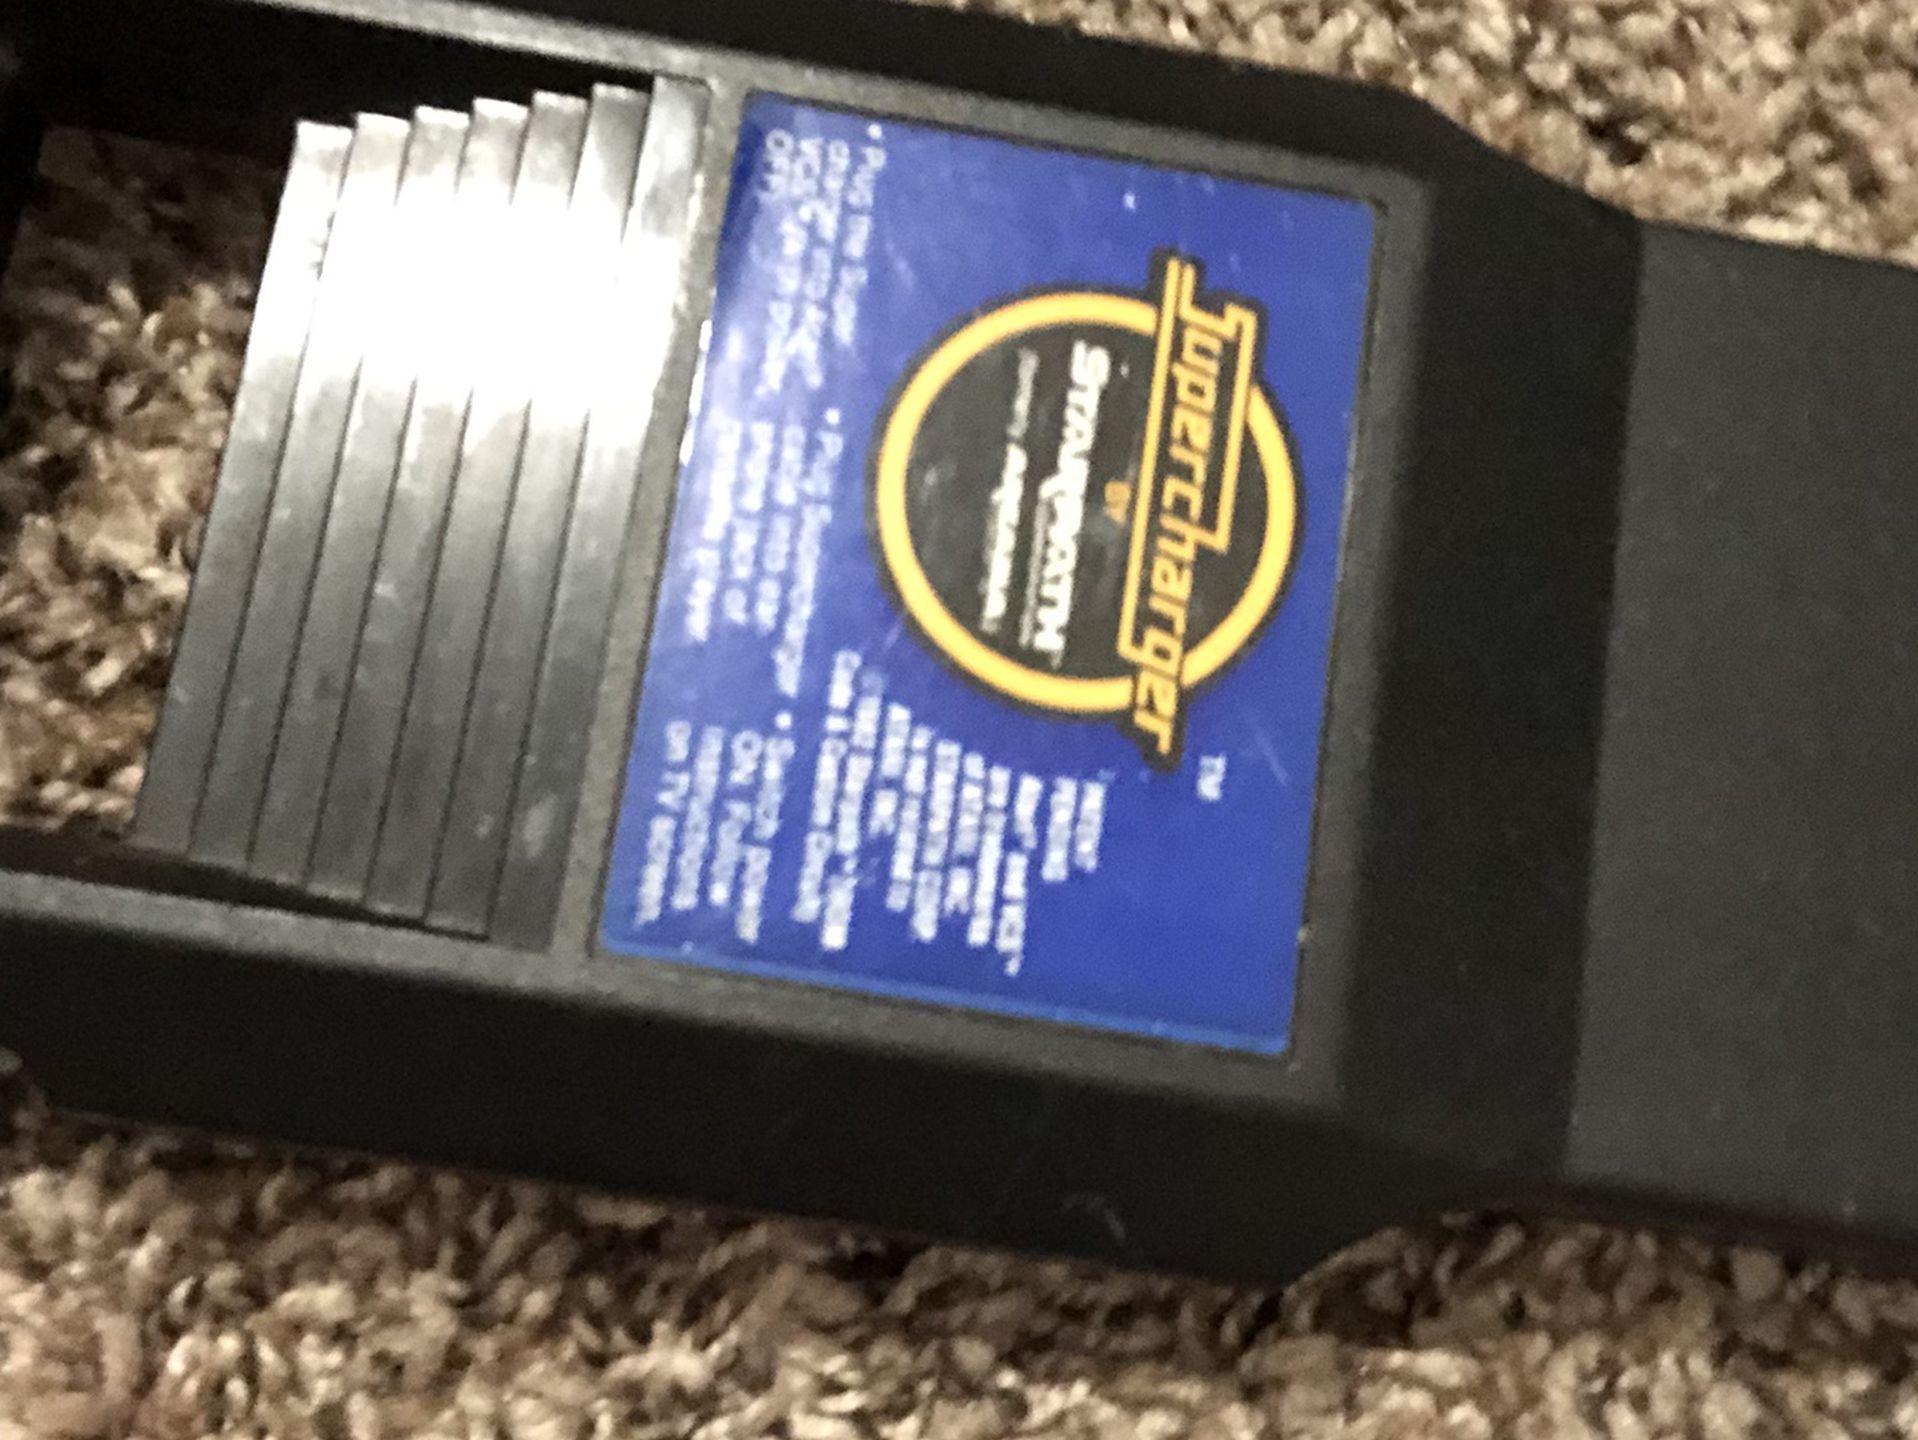 Super Charger For Atari 2600 VCS